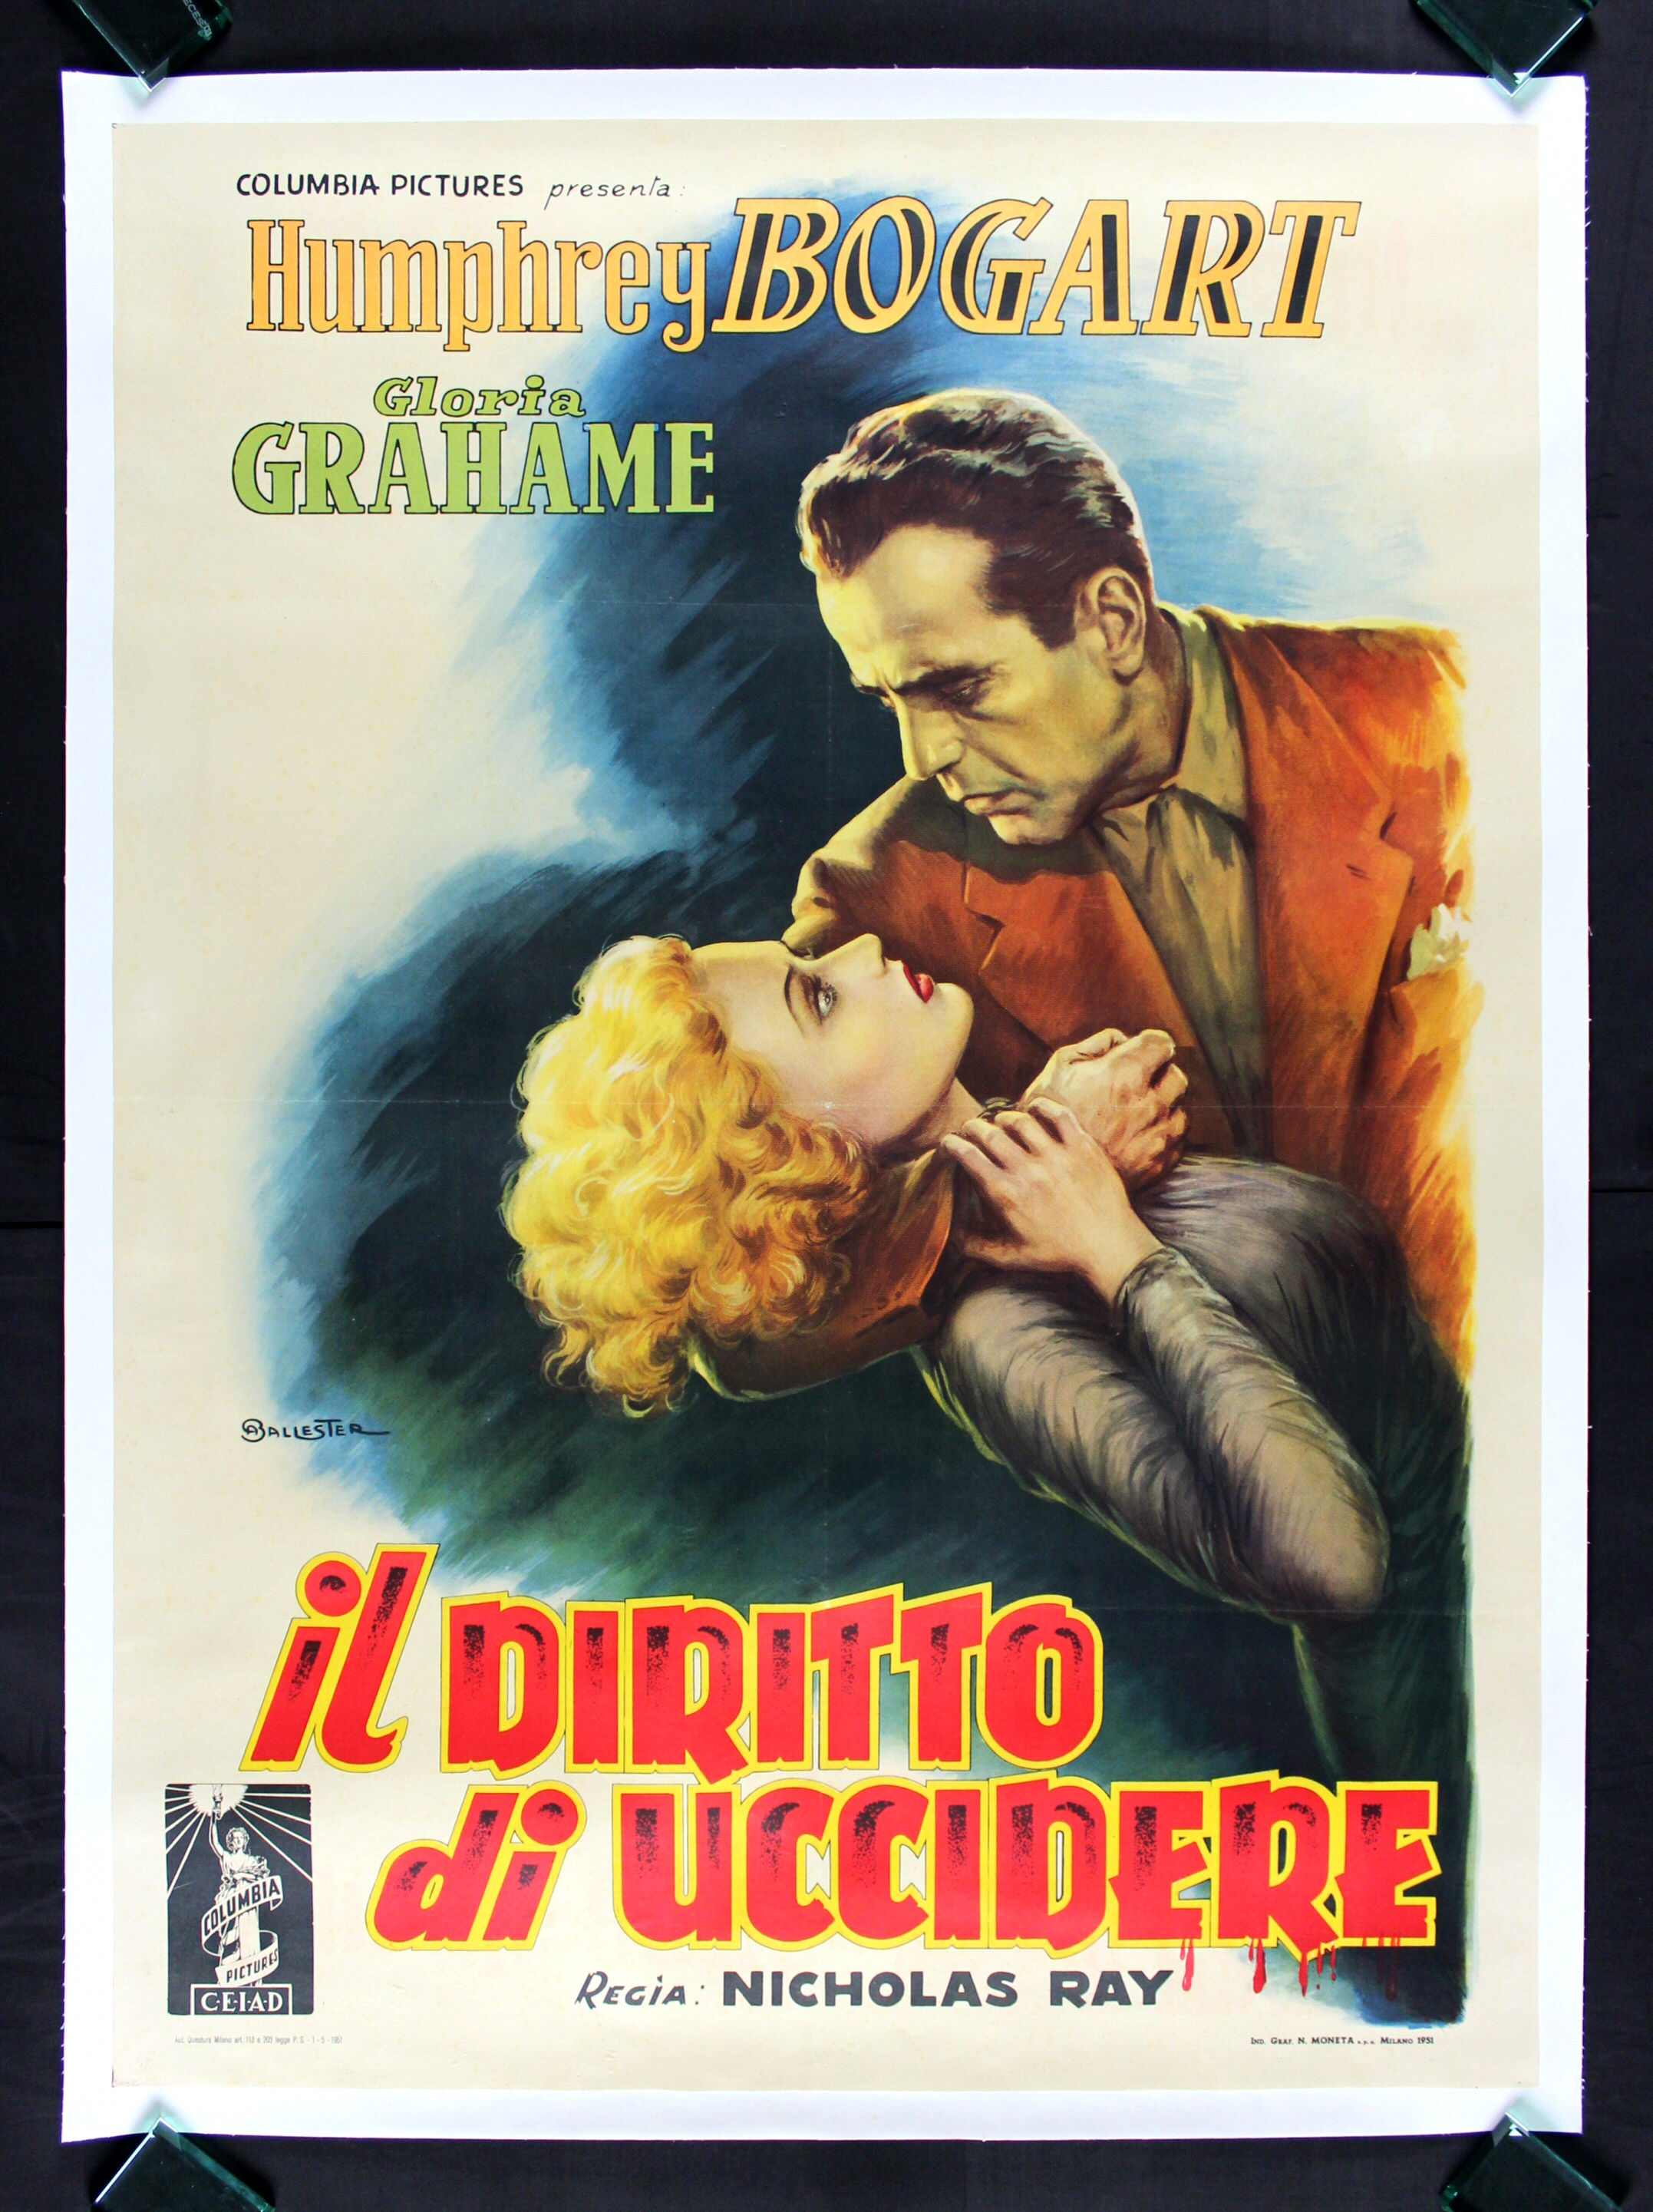 Vintage Movie Posters * CineMasterpieces * Original Movie Posters